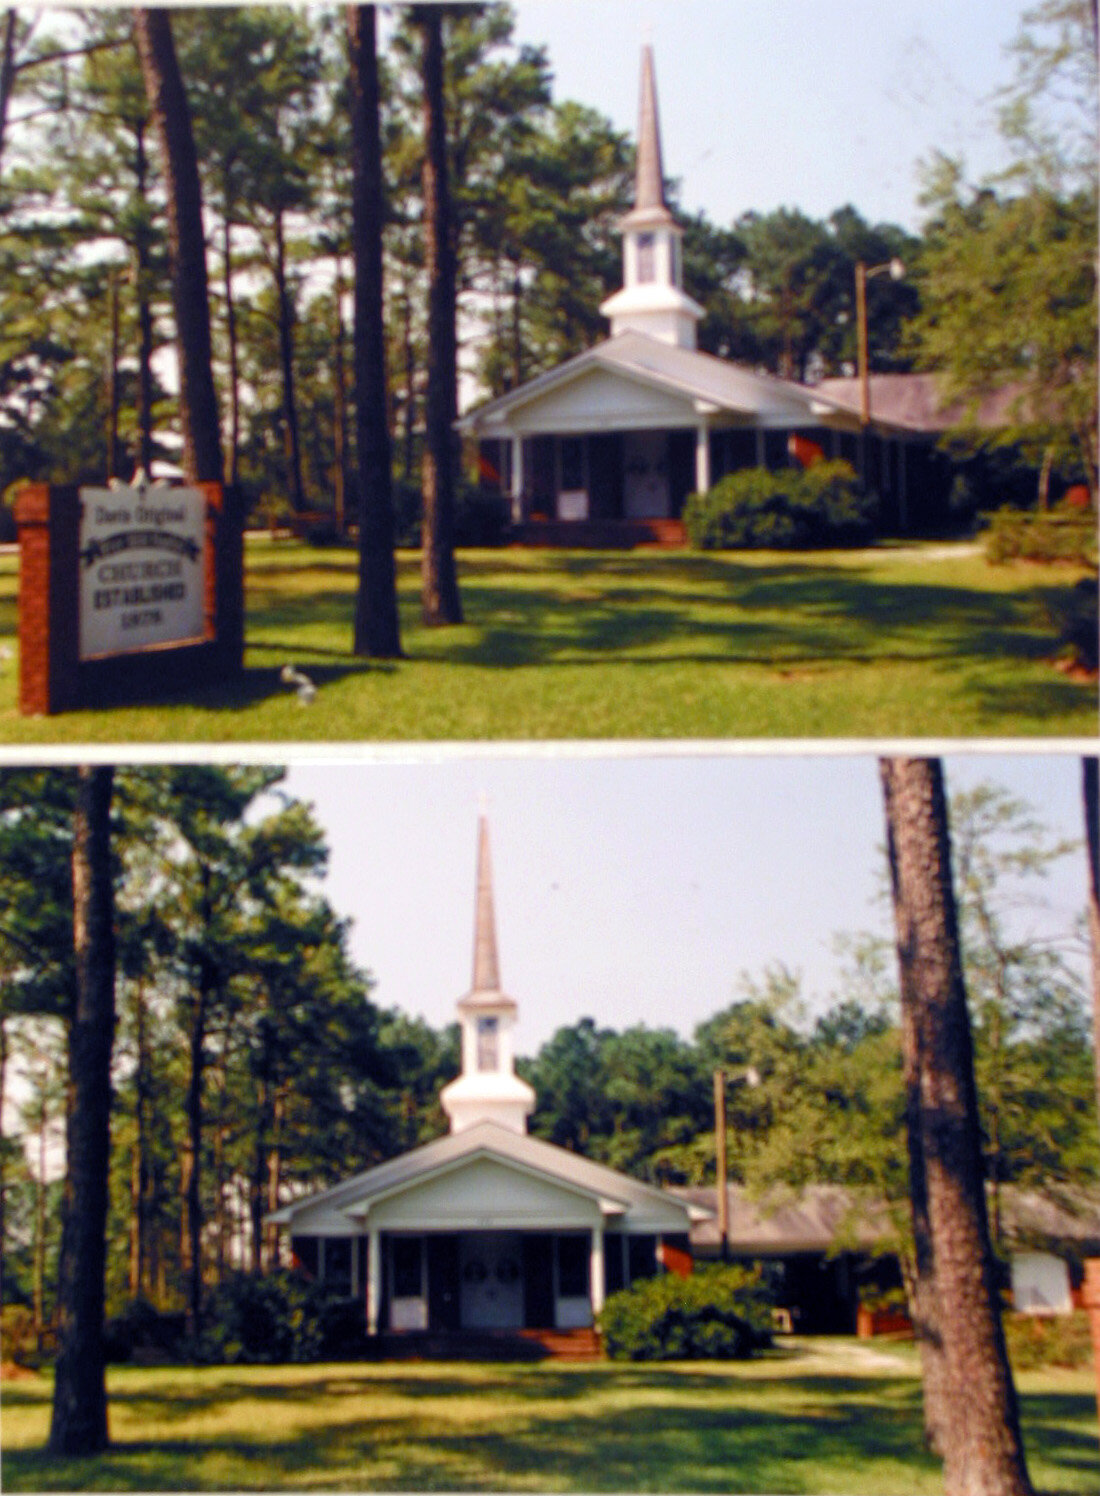 Davis Original Free Will Baptist Church.jpg